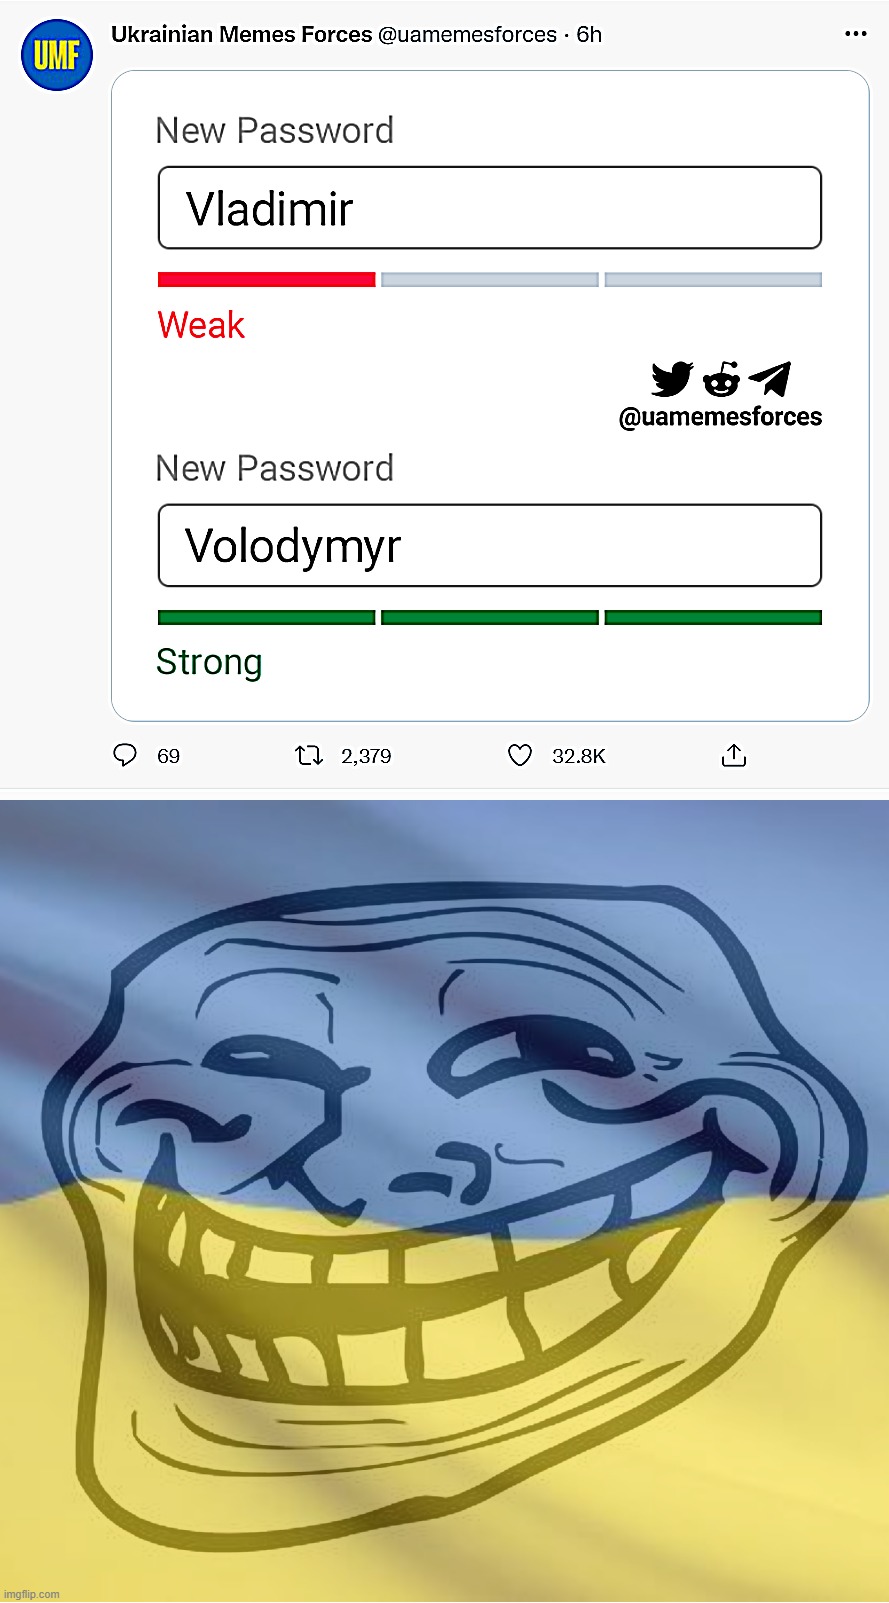 Gottem! | image tagged in vladimir vs volodymyr,trollface | made w/ Imgflip meme maker